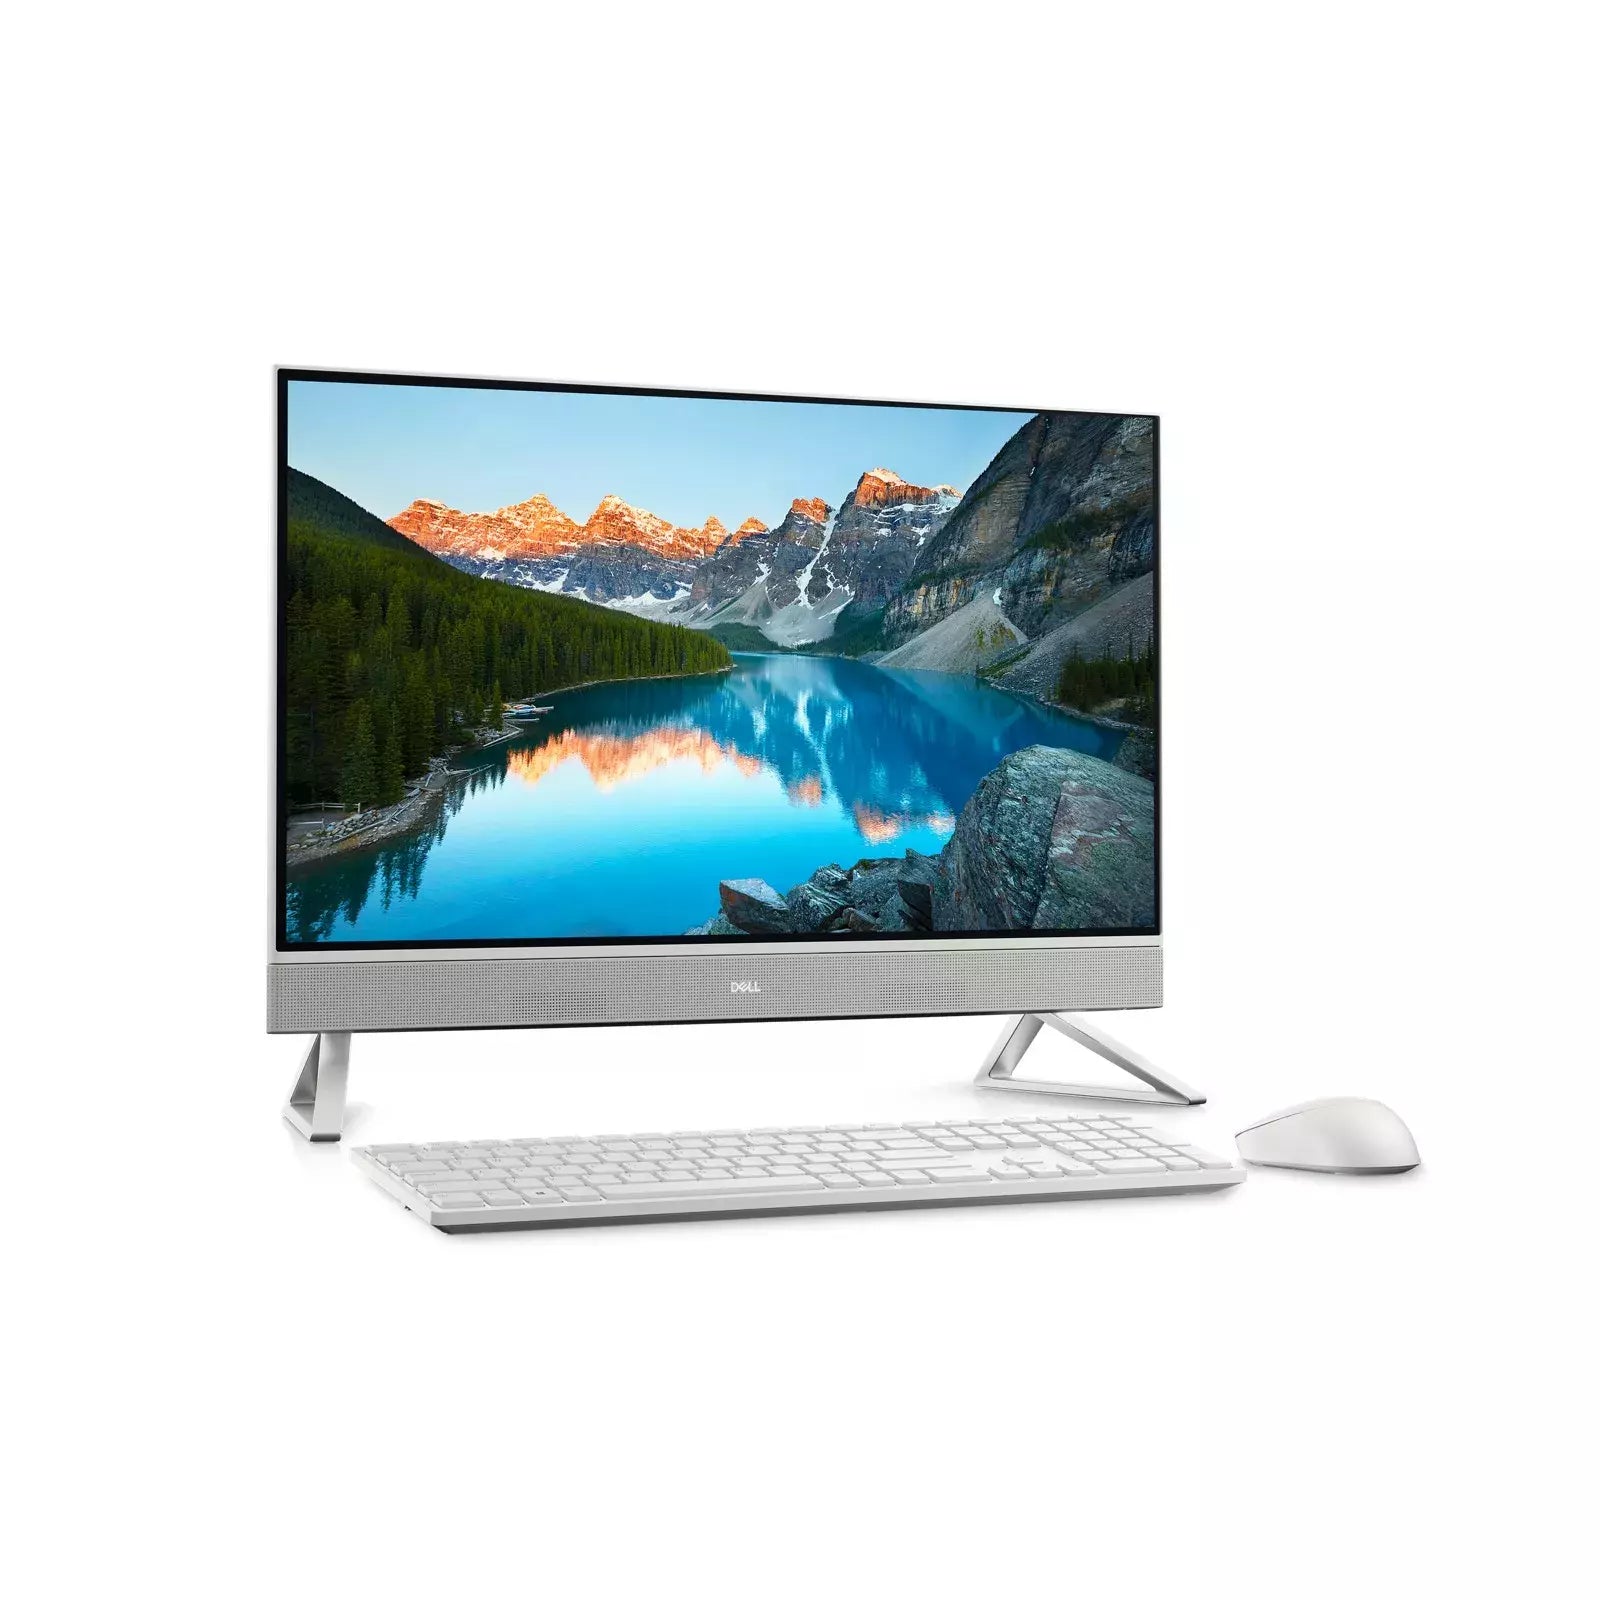 Dell Inspiron 7720 All-in-One Desktop PC | 27